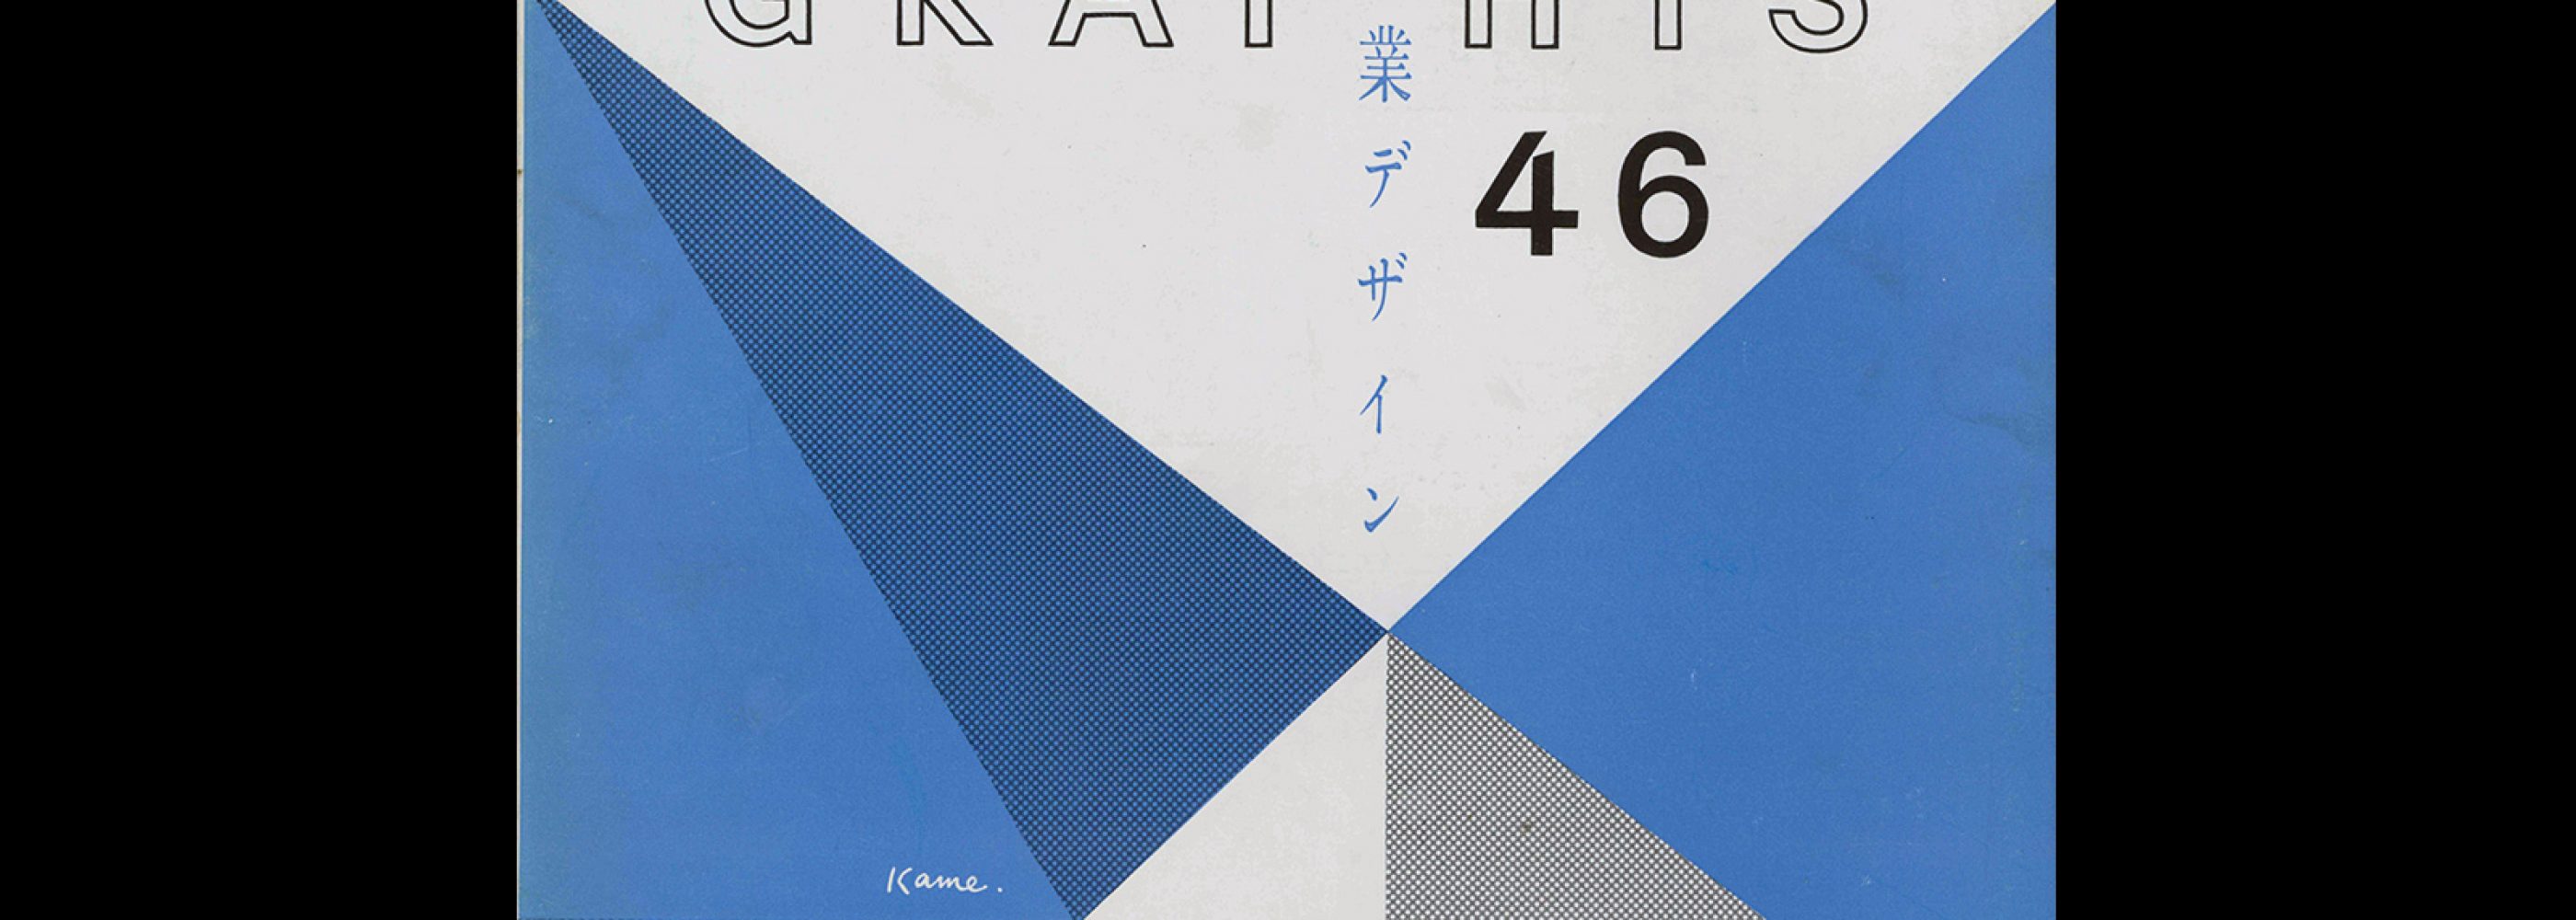 Graphis 46, 1953. Cover design by Yasaku Kamekura